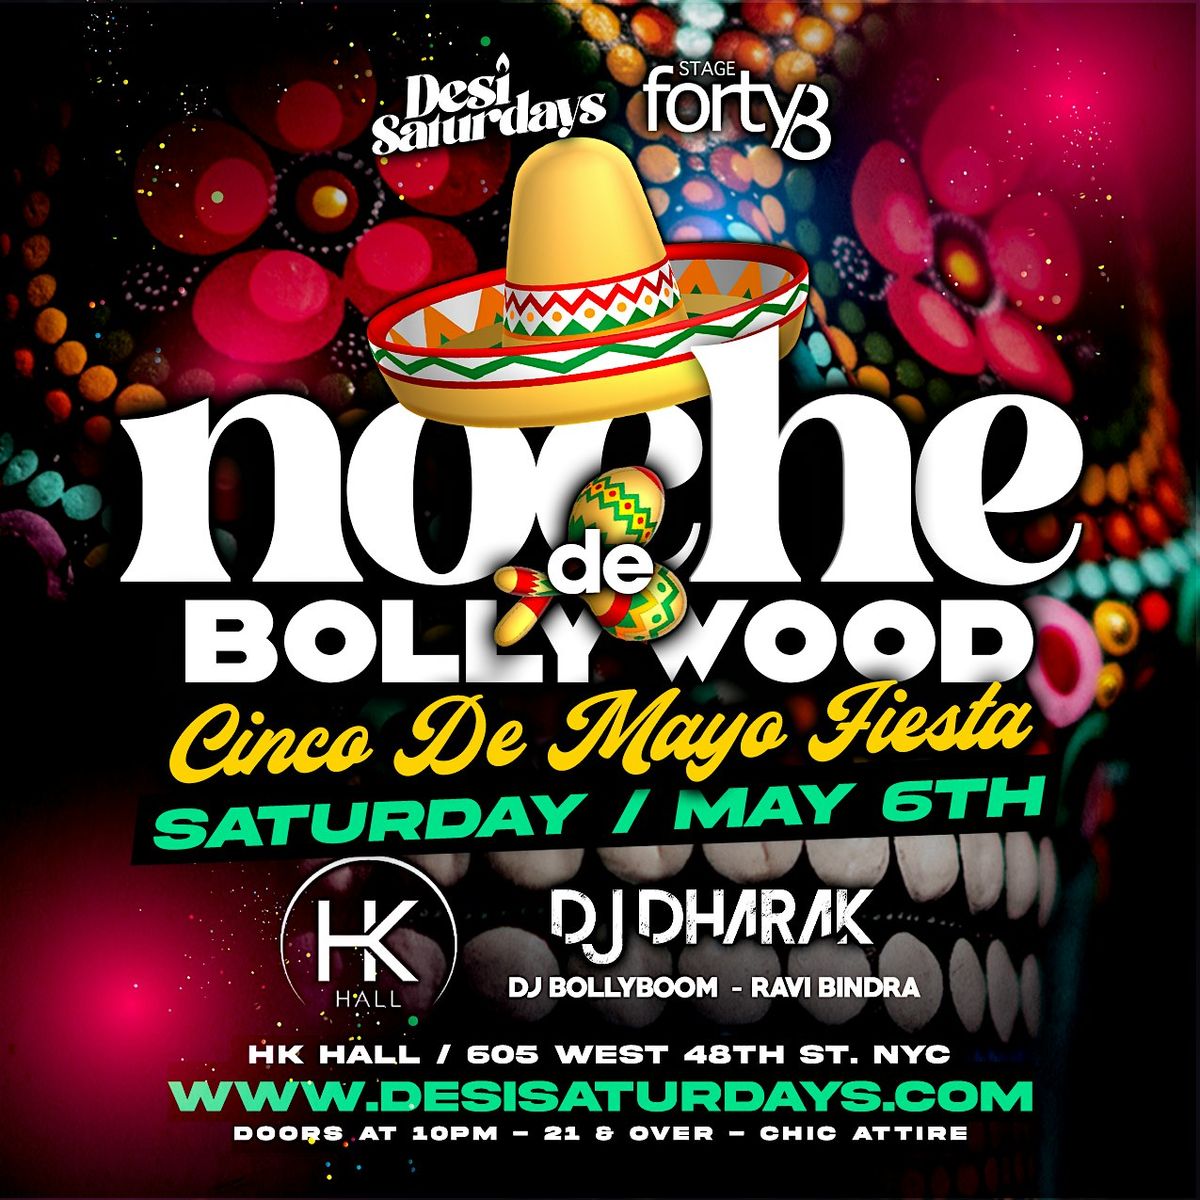 Noche De Bollywood - A Cinco De Mayo Bollywood Fiesta @ HK HALL